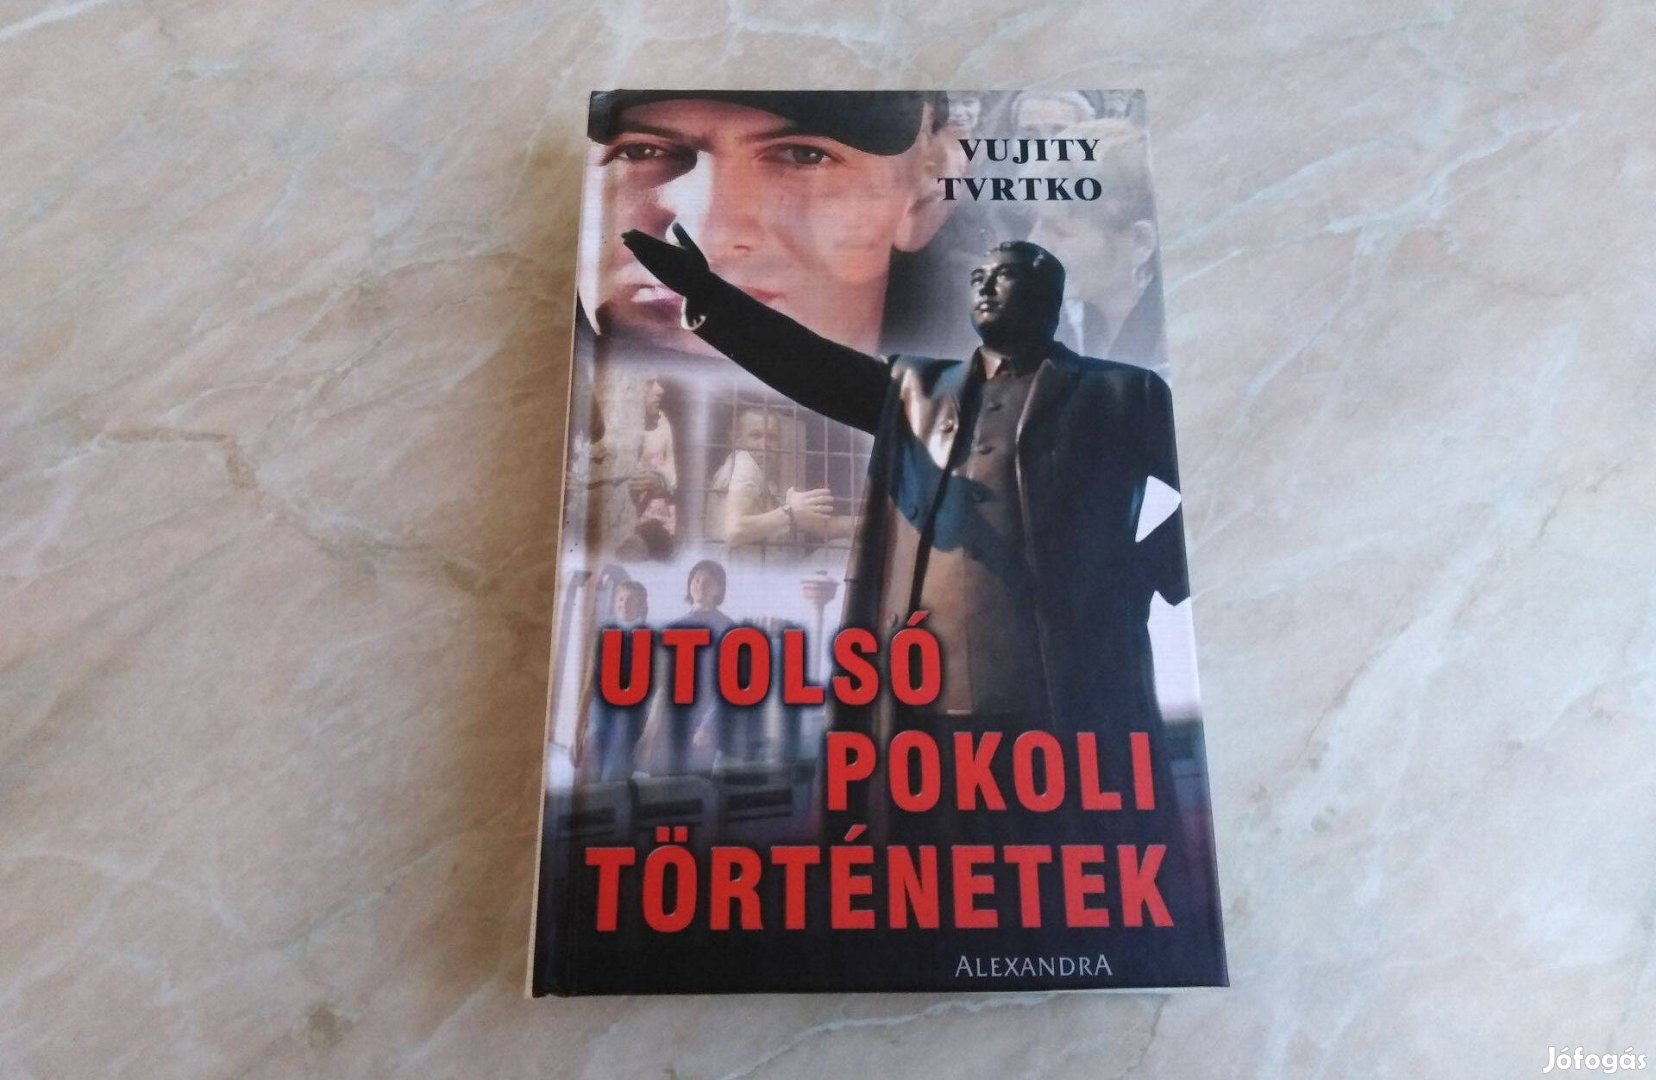 Utolsó pokoli történetek - Vujity Tvrtko